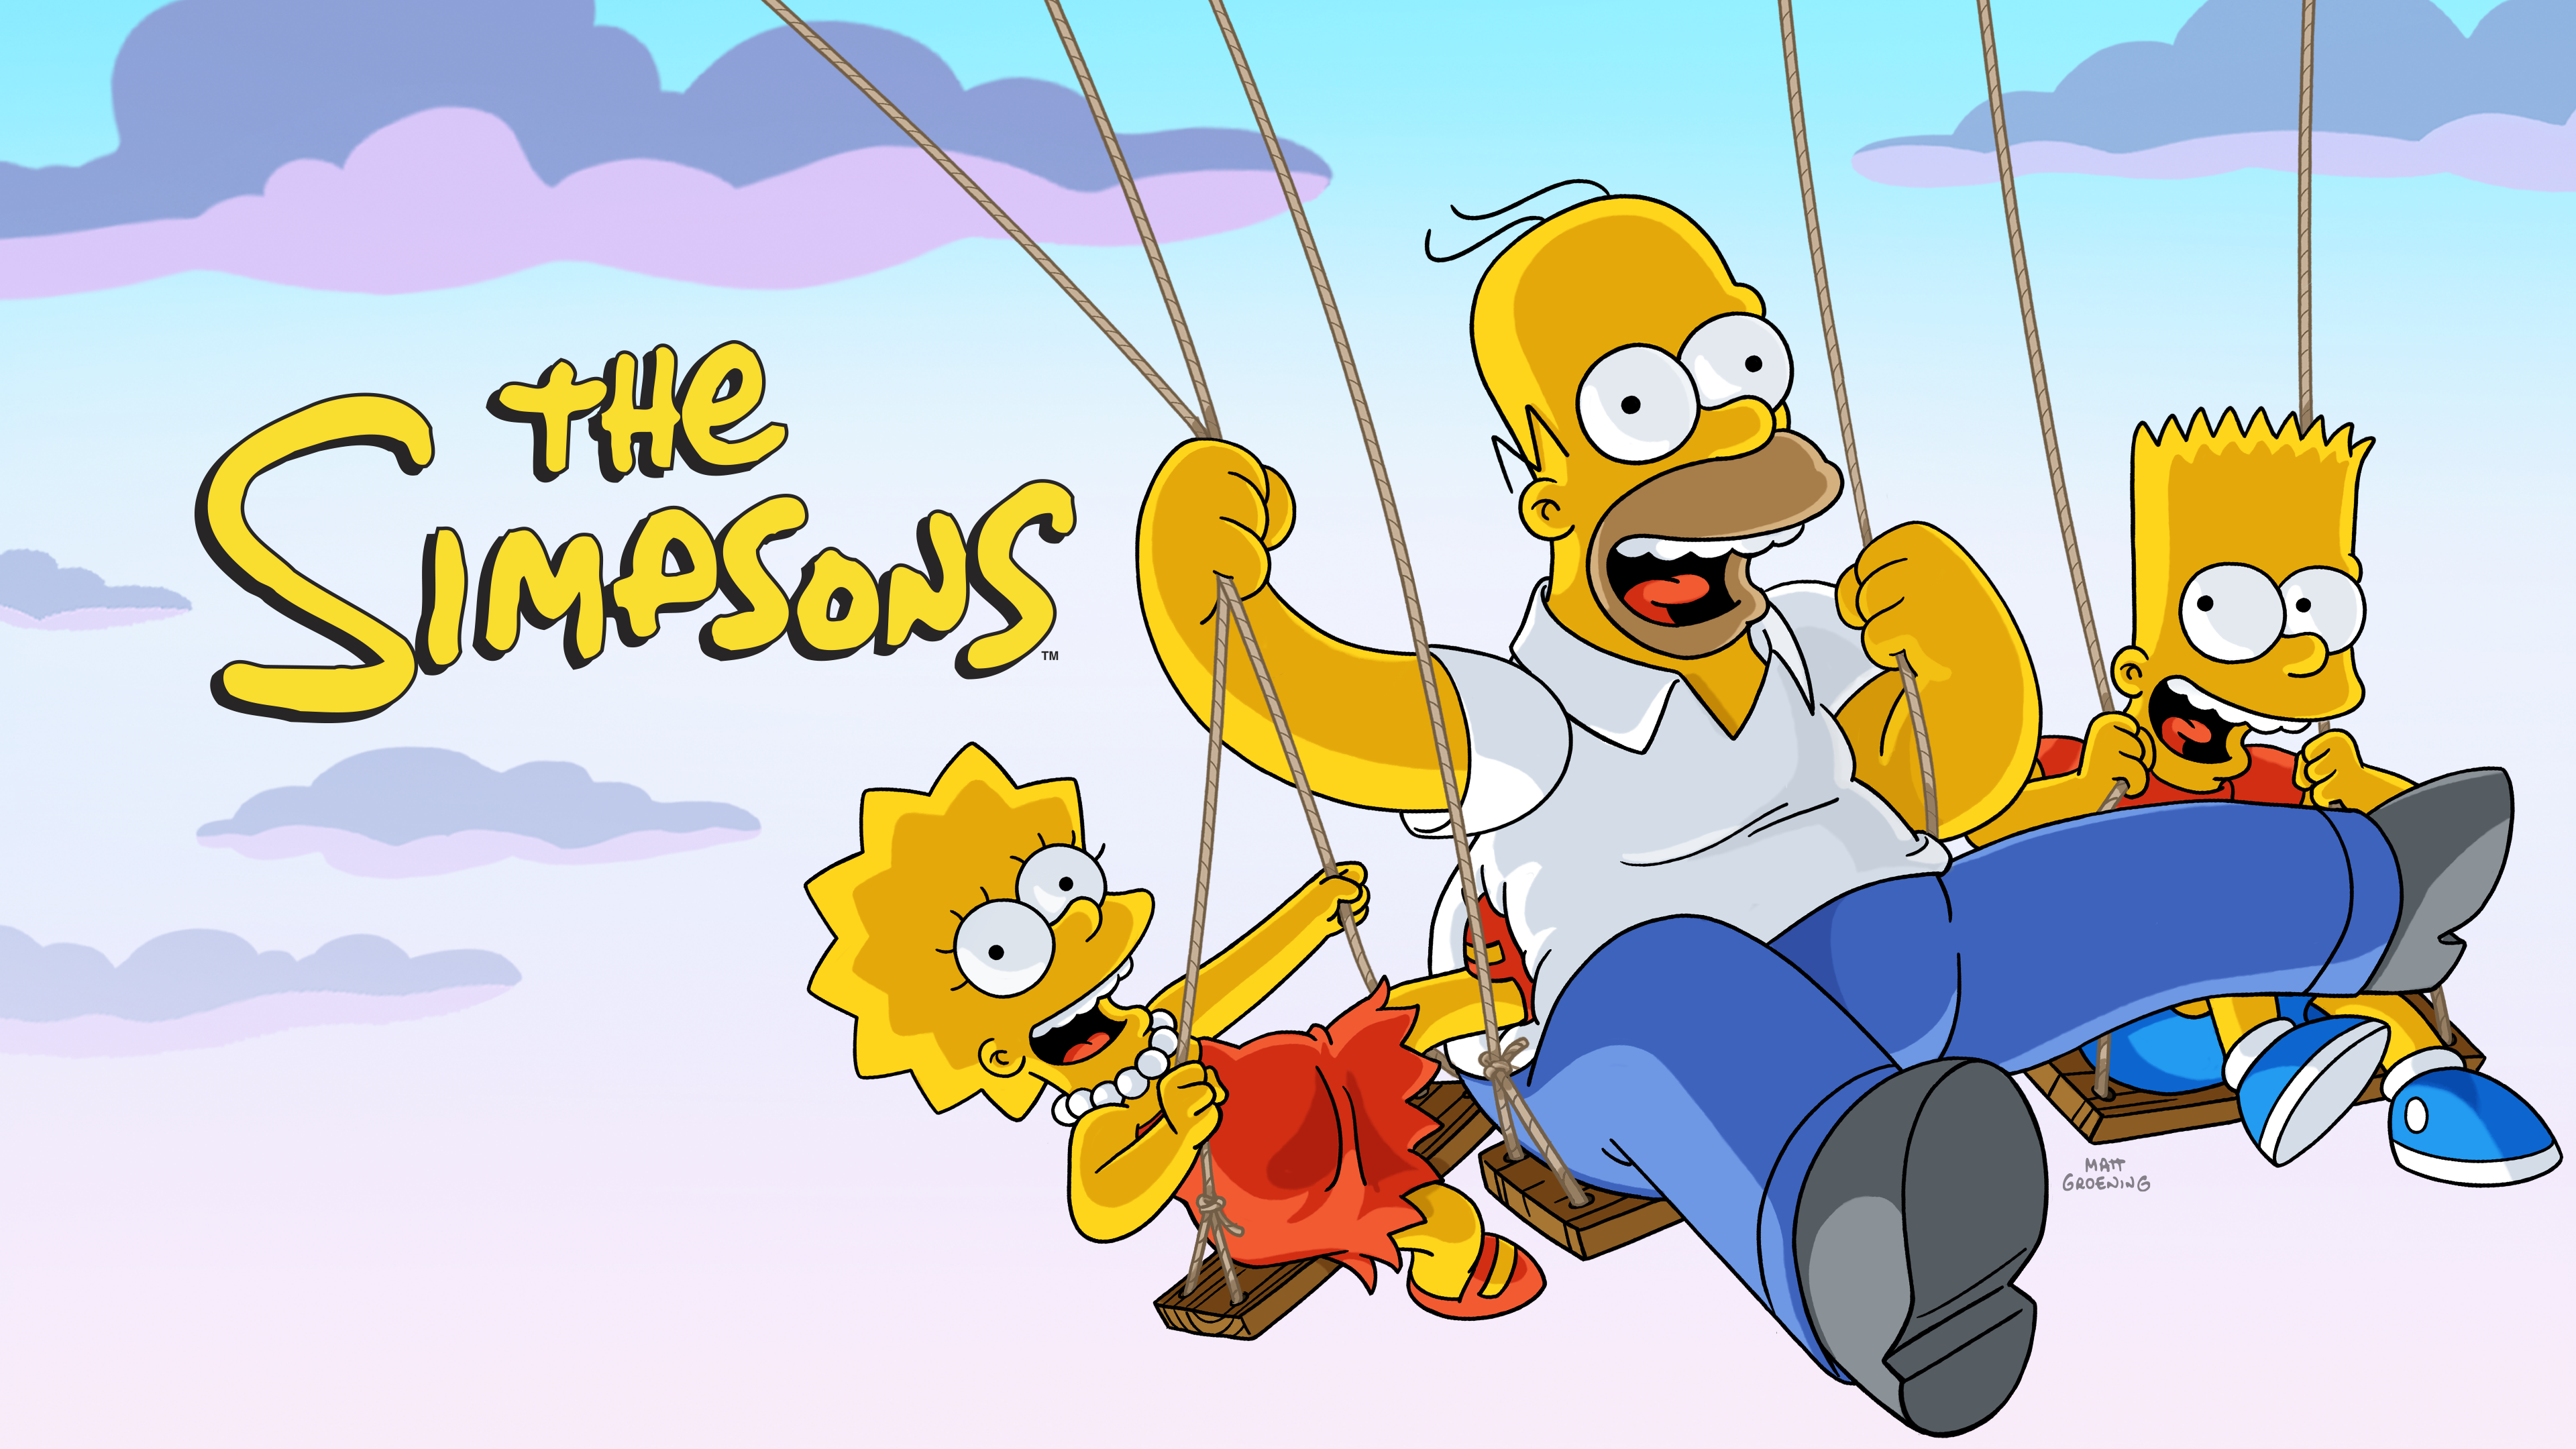 Watch The Simpsons | Disney+